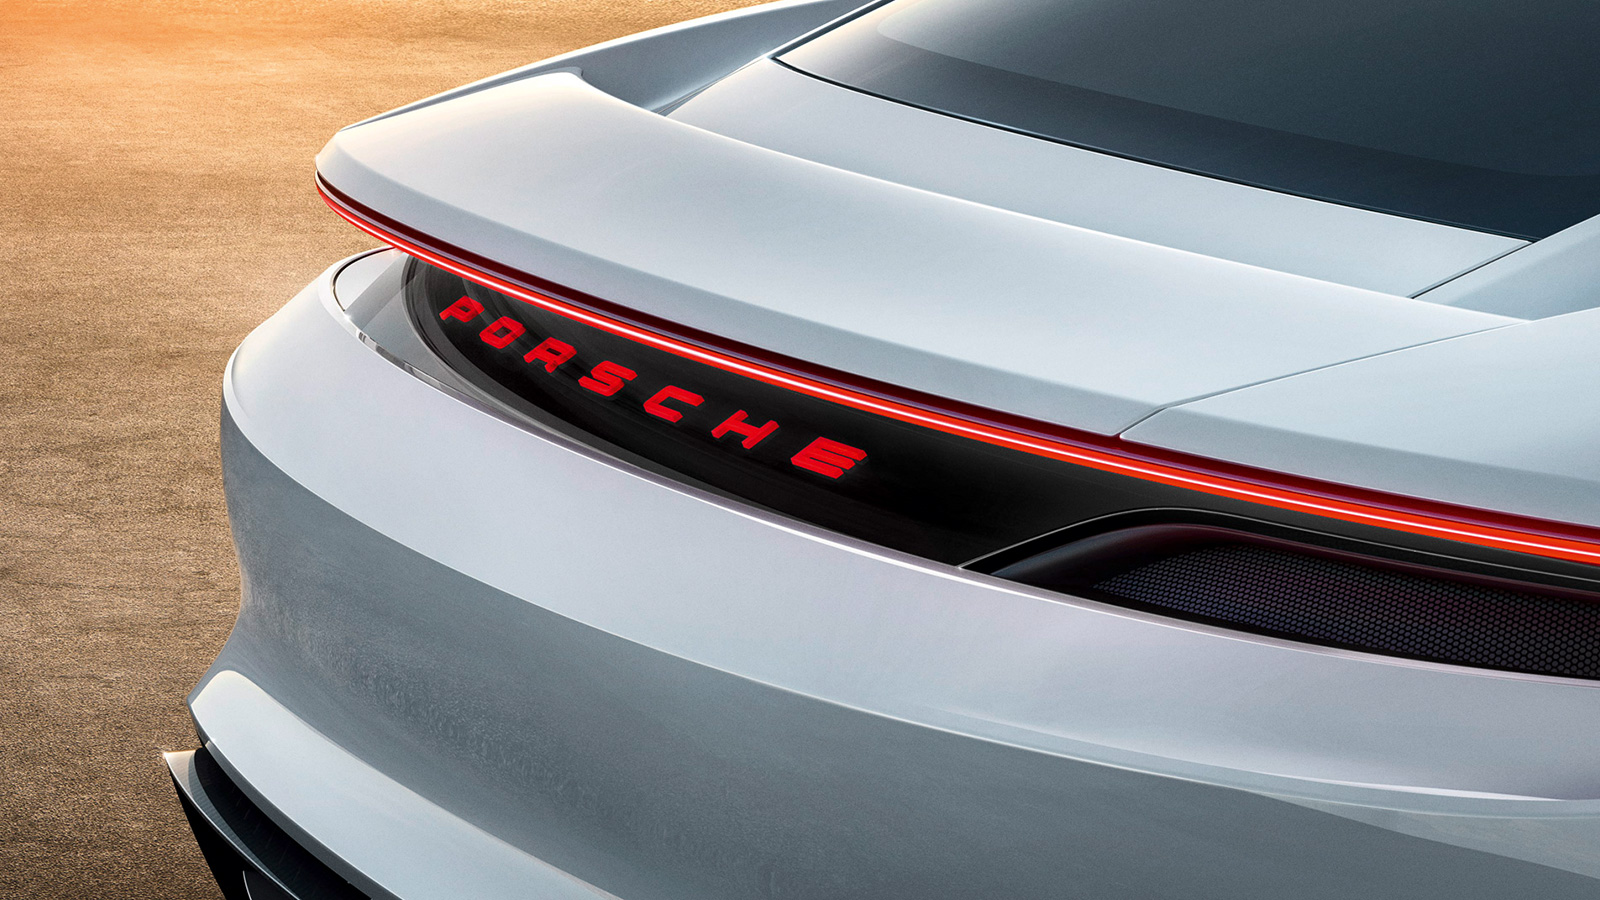 Porsche's Mission E sports sedan 2020 red arc of light back side car view 4k photo